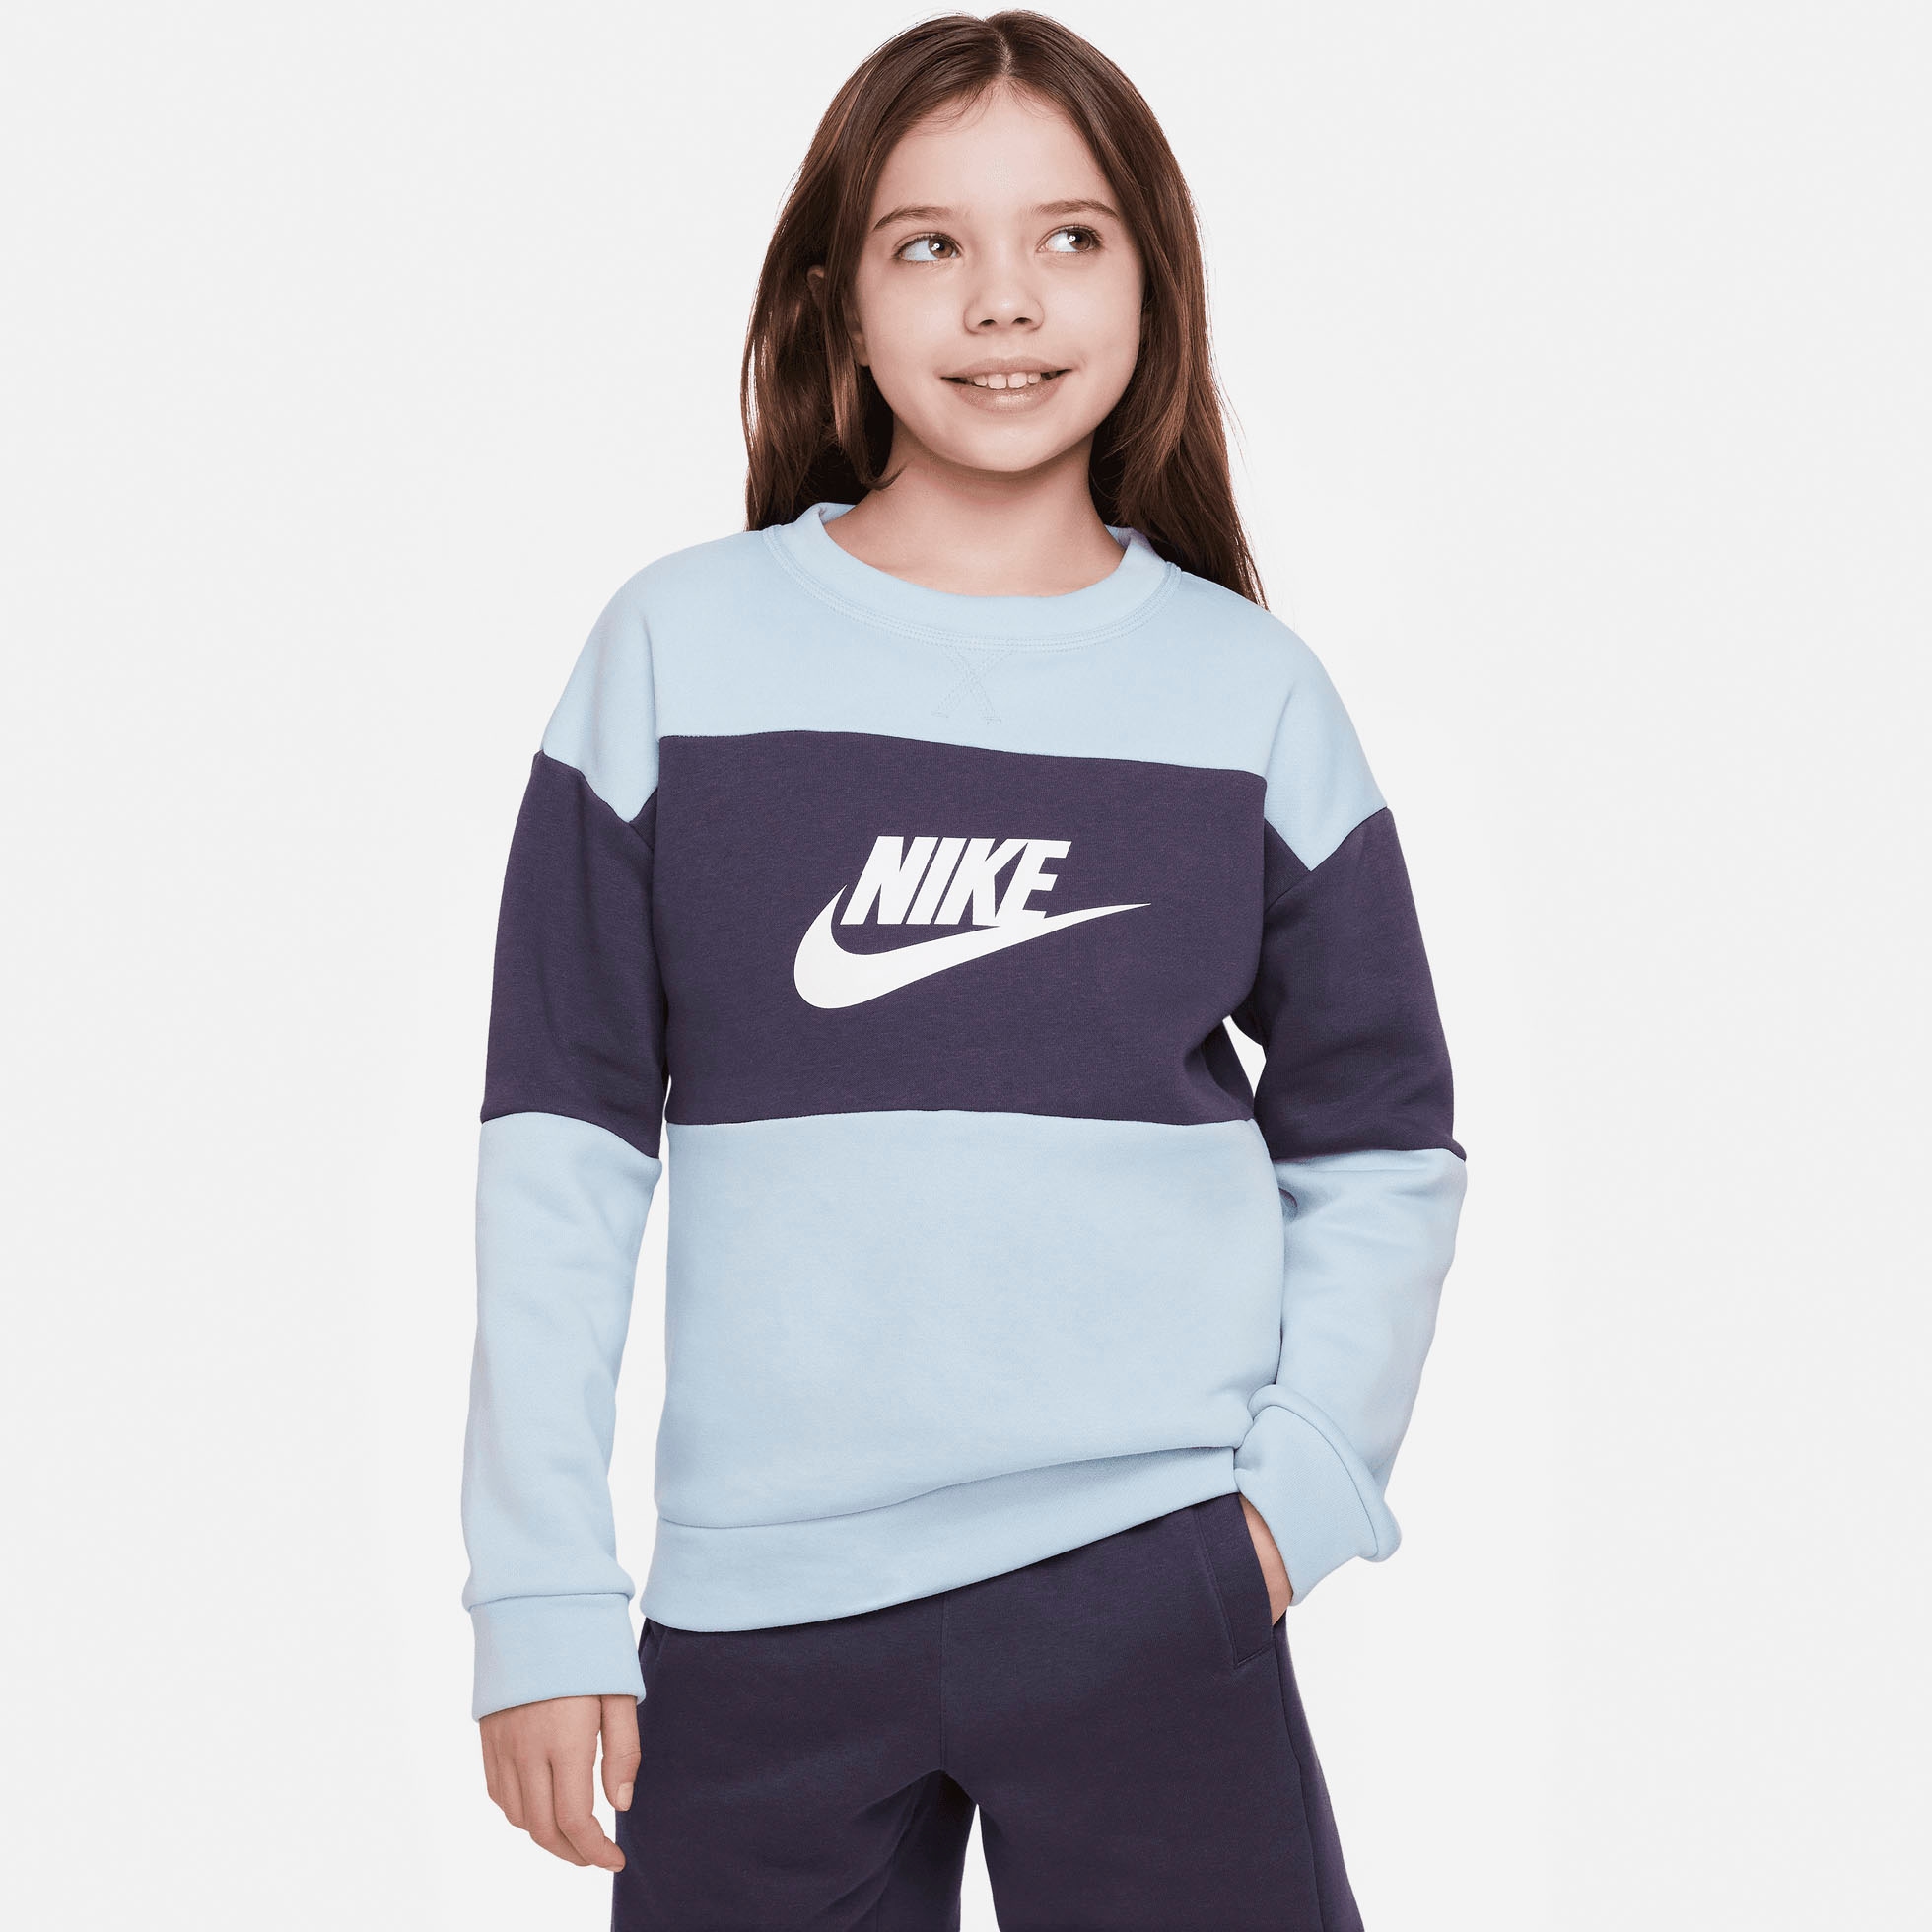 Nike Sportswear bestellen French Trainingsanzug »Big Terry Kids\' OTTO bei Tracksuit«